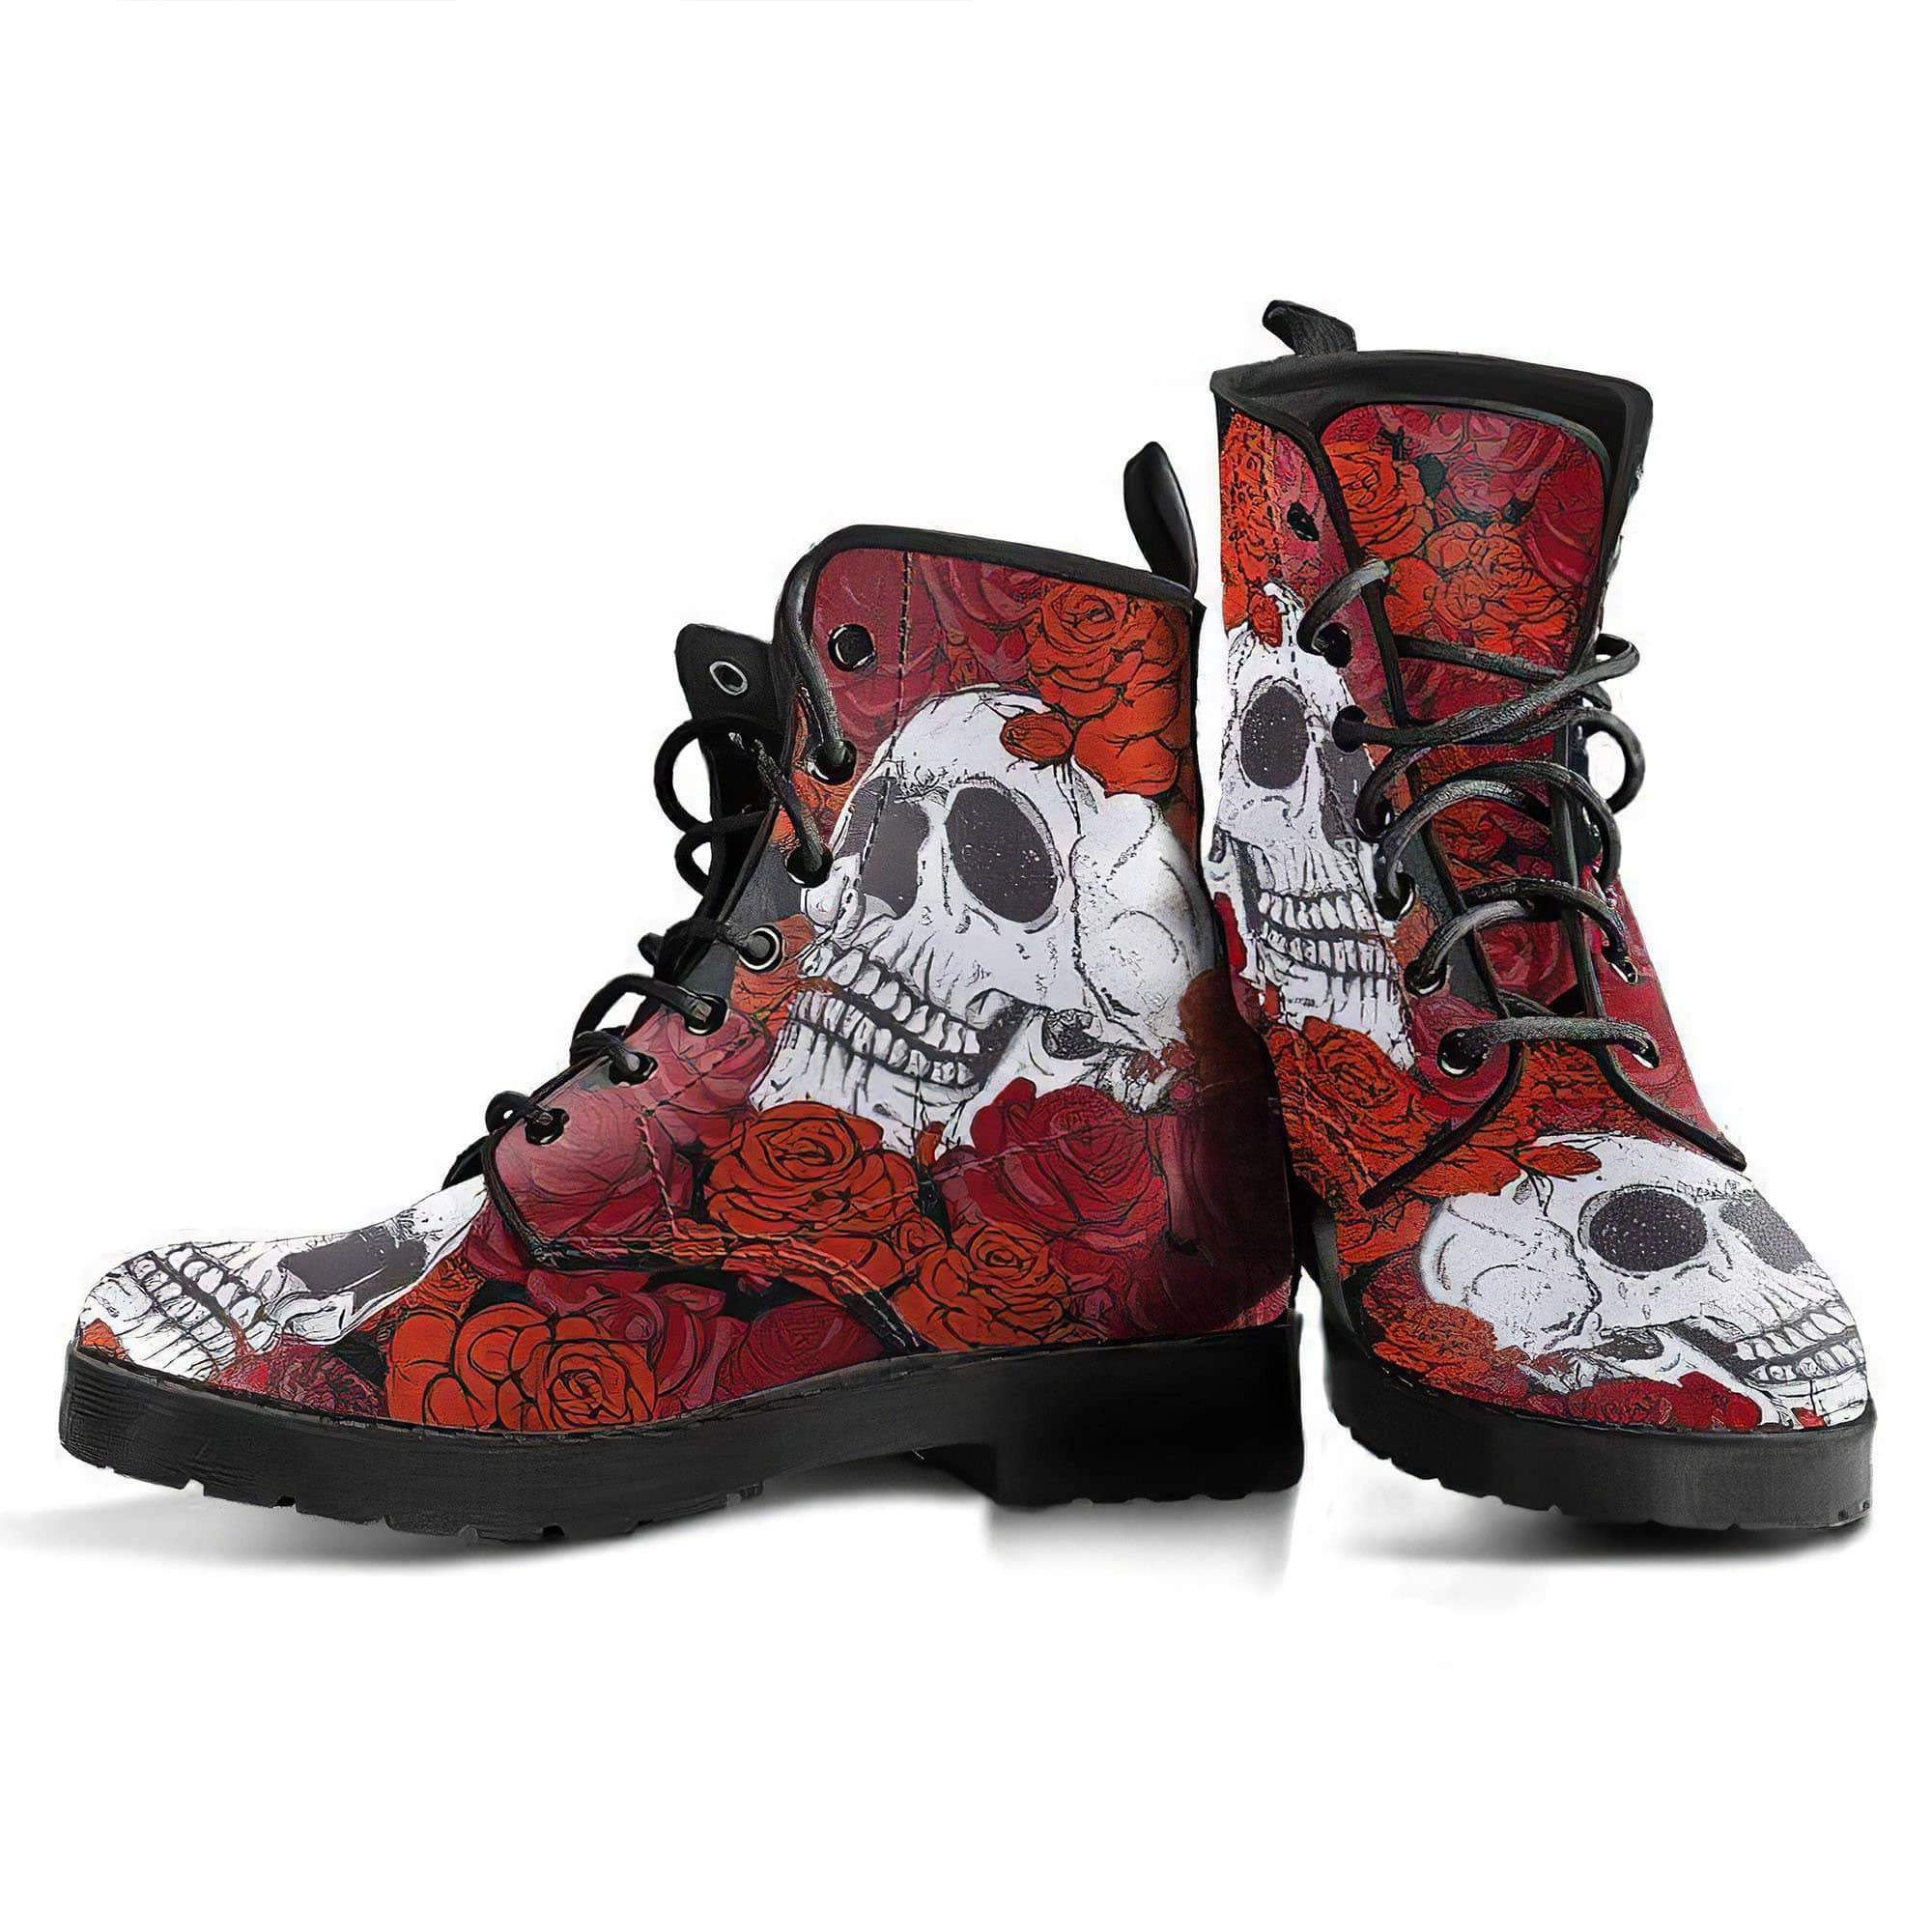 skull-roses-women-s-boots-vegan-friendly-leather-women-s-leather-boots-12051950043197.jpg